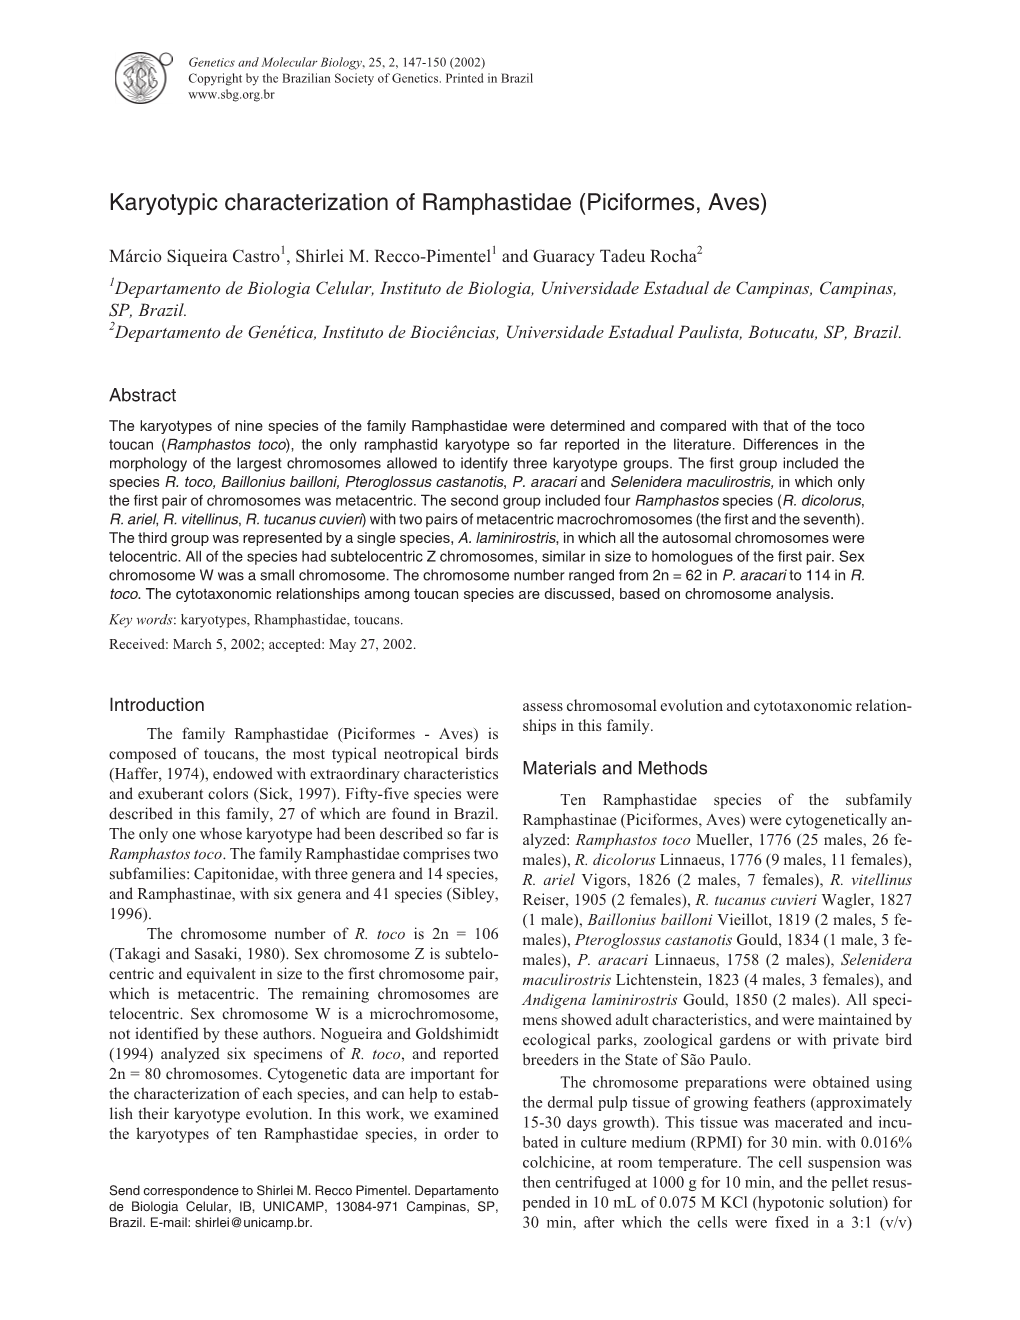 Karyotypic Characterization of Ramphastidae (Piciformes, Aves)